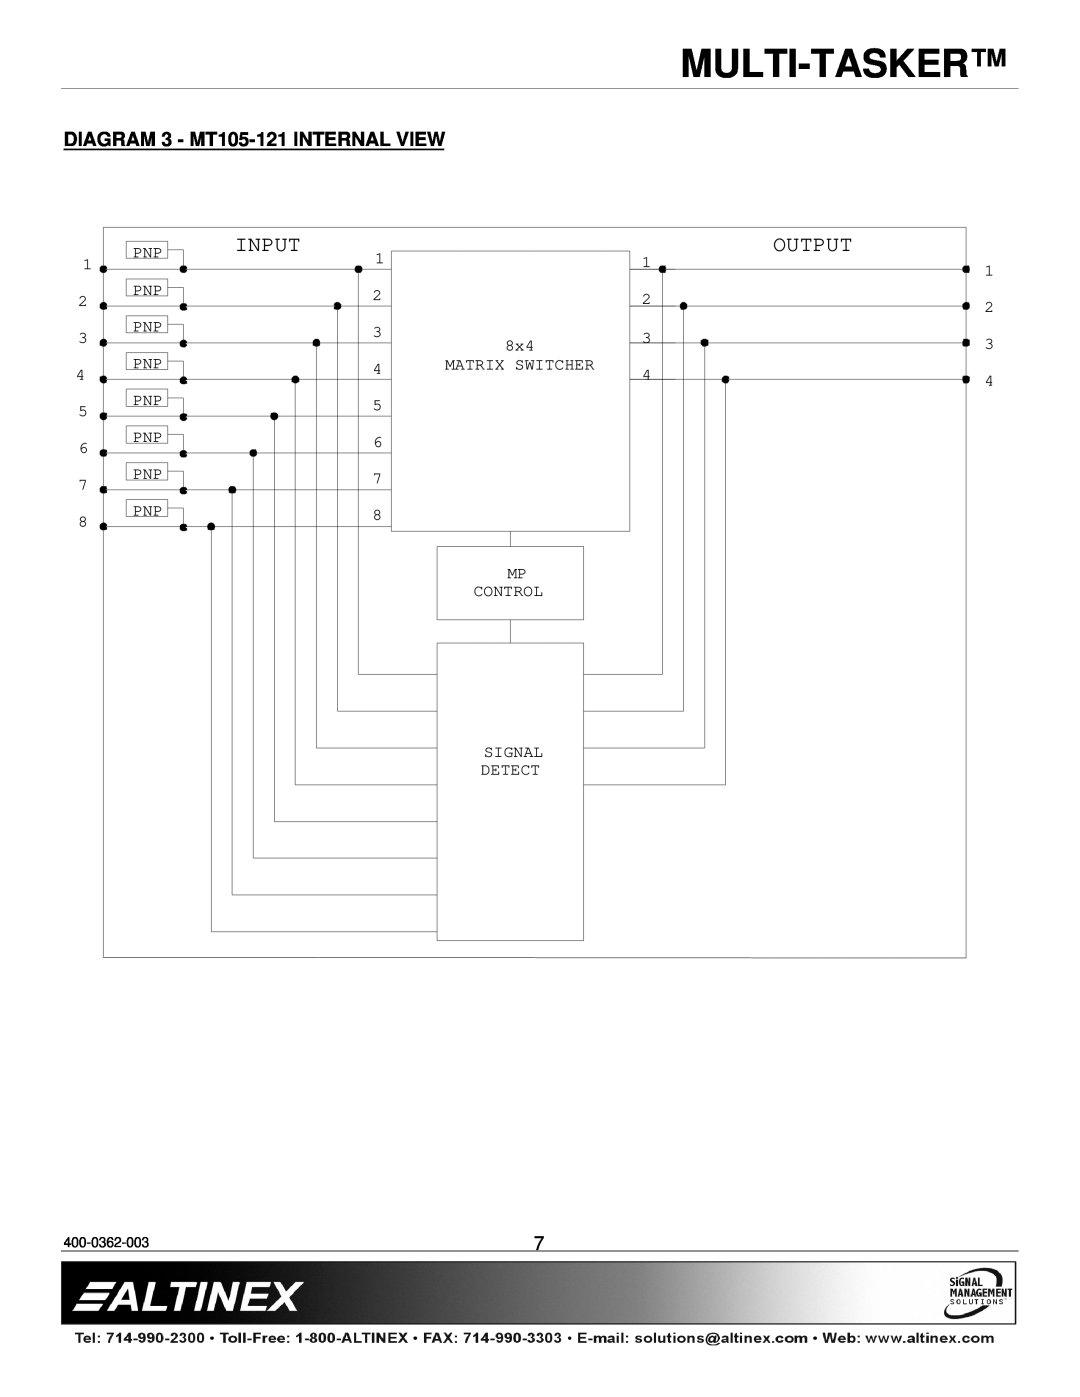 Altinex MT105-120/121 manual DIAGRAM 3 - MT105-121 INTERNAL VIEW, Multi-Tasker, Input, Output, Pnp Pnp Pnp Pnp Pnp Pnp Pnp 